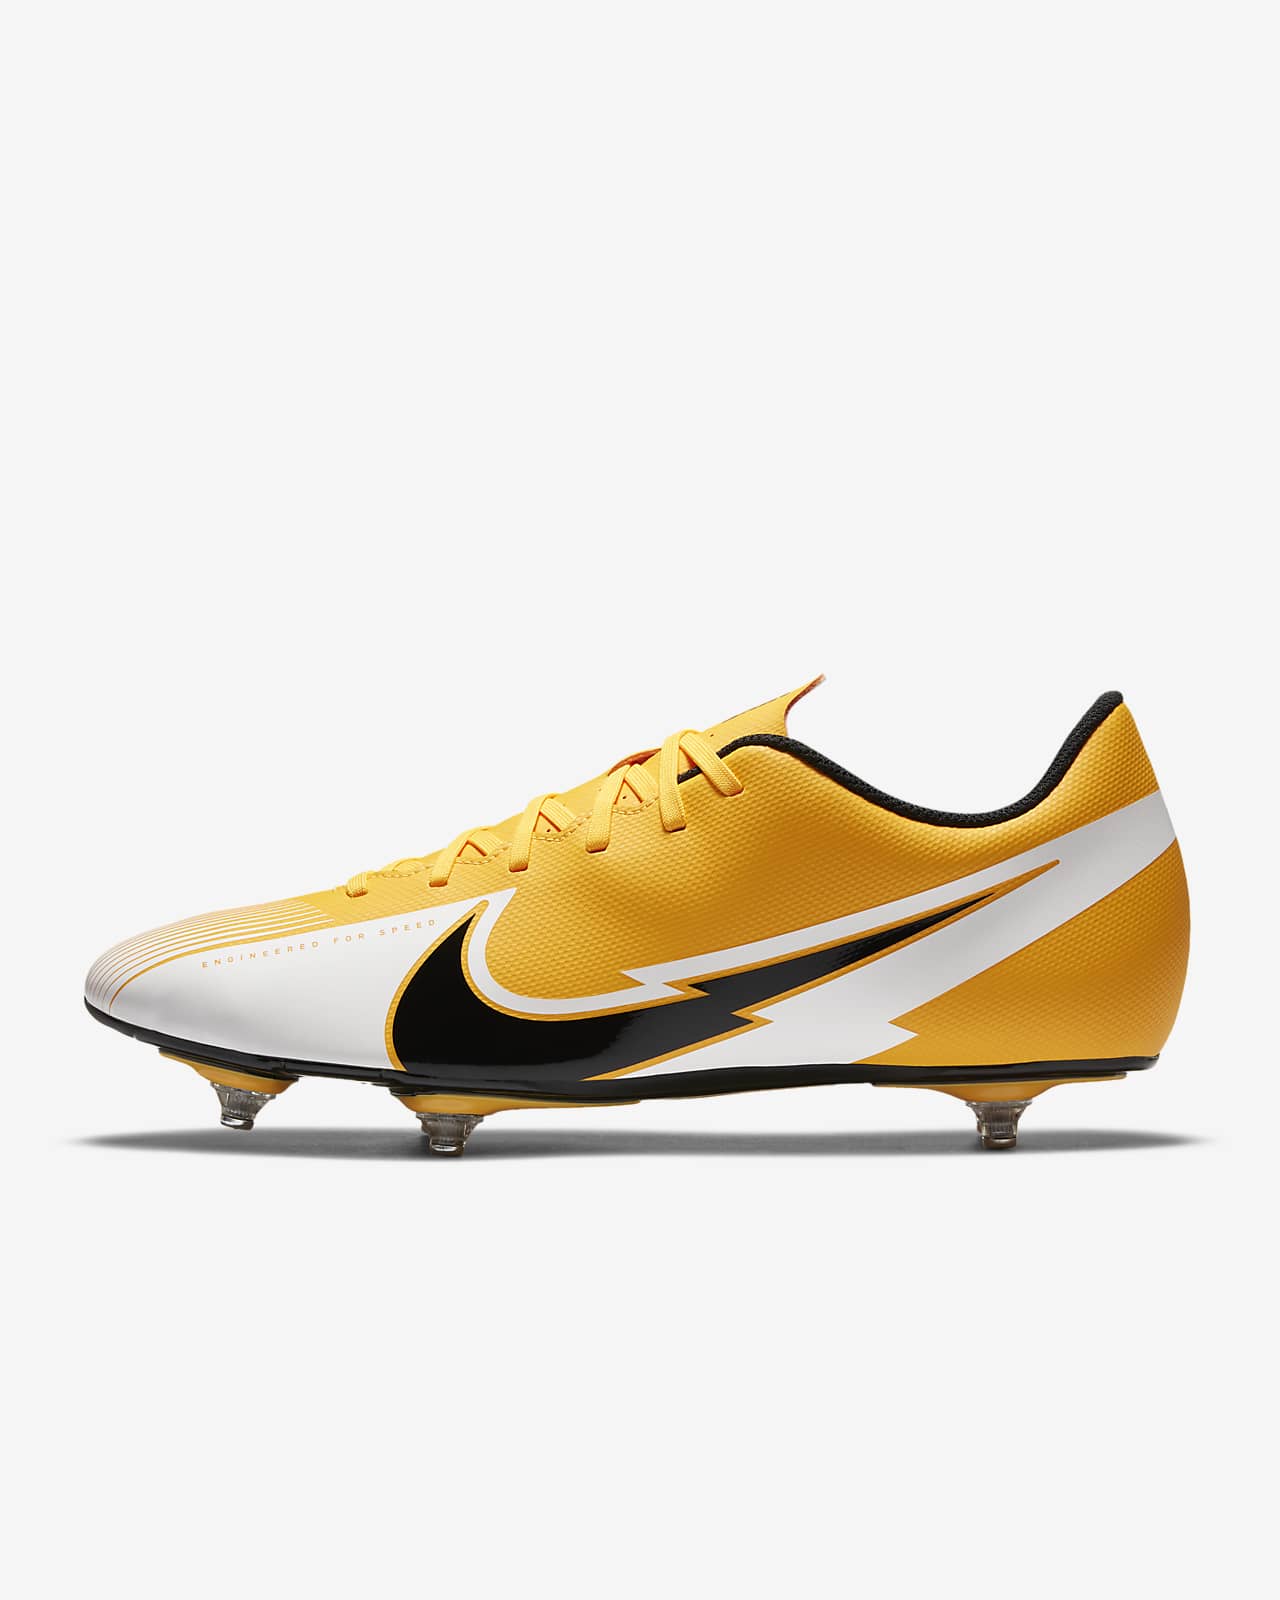 nike football shoes yellow